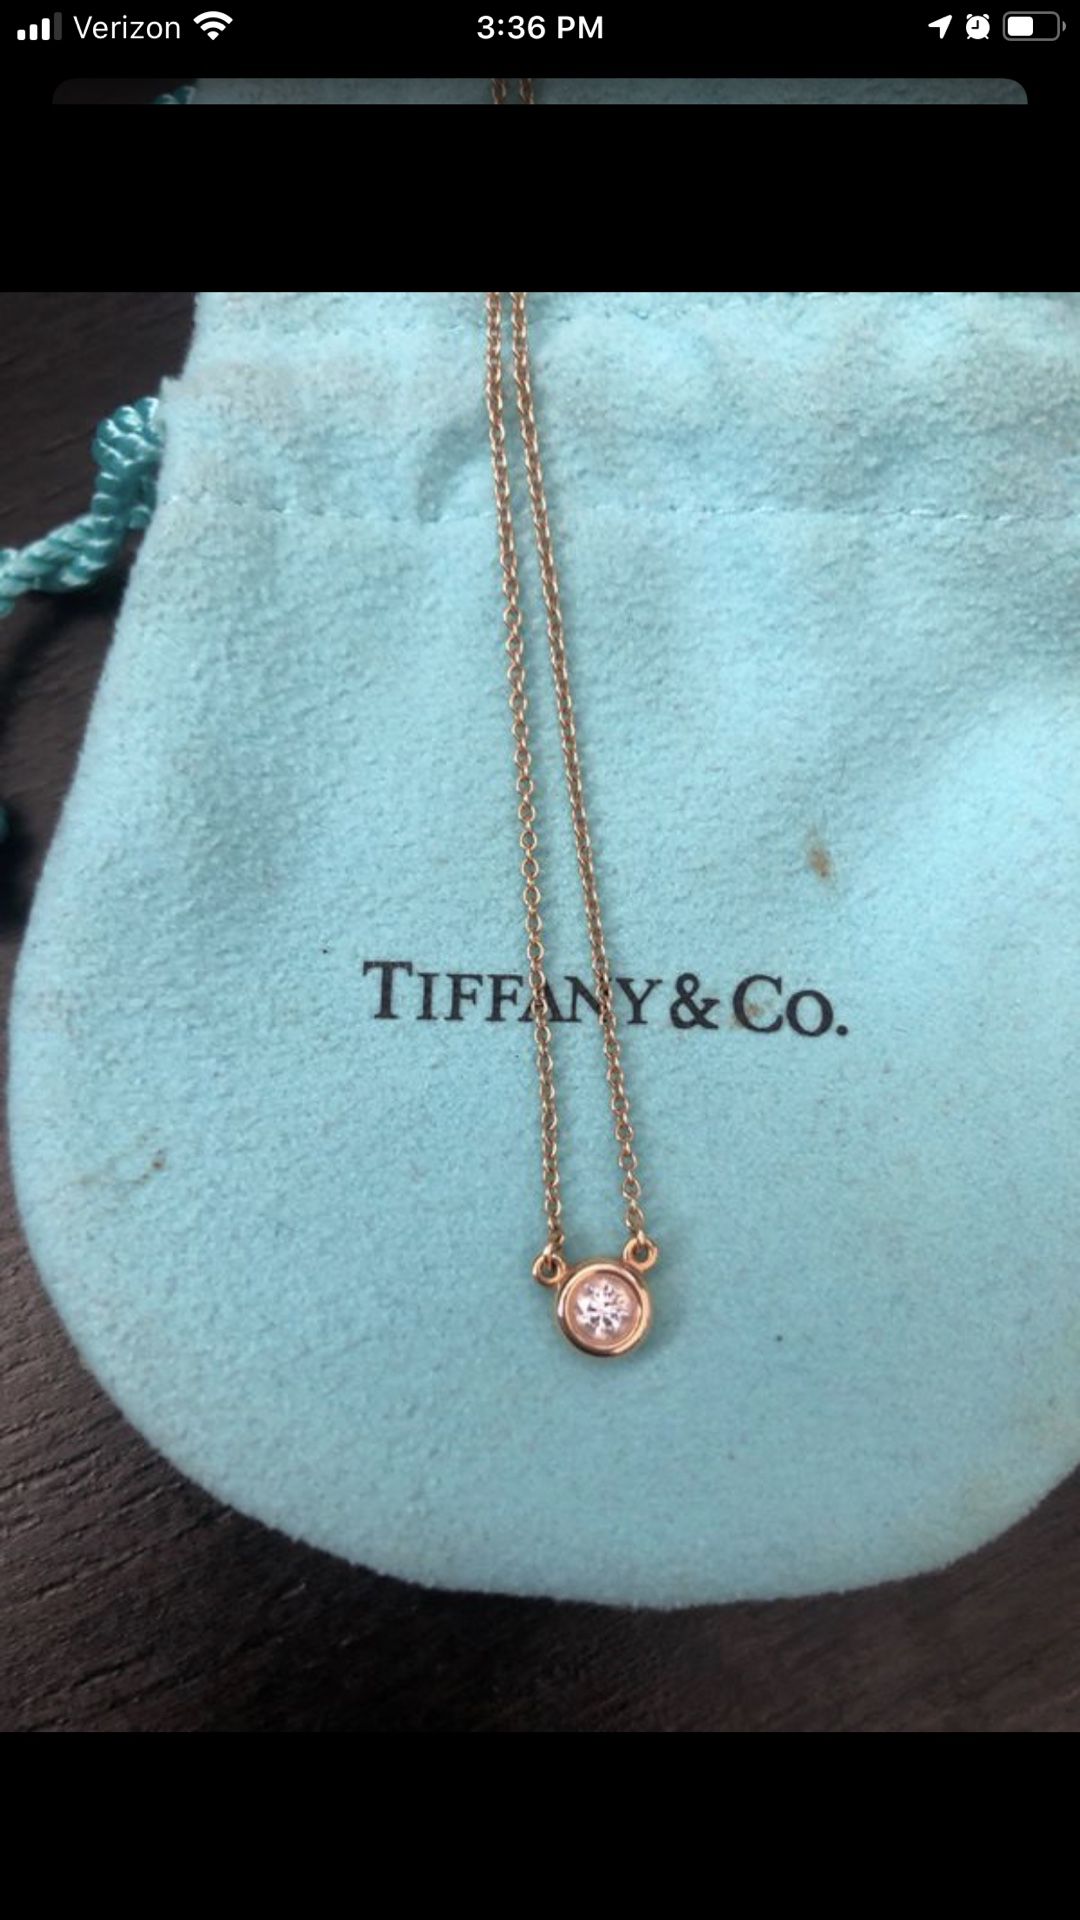 Tiffany&co diamond pendant necklace yellow gold